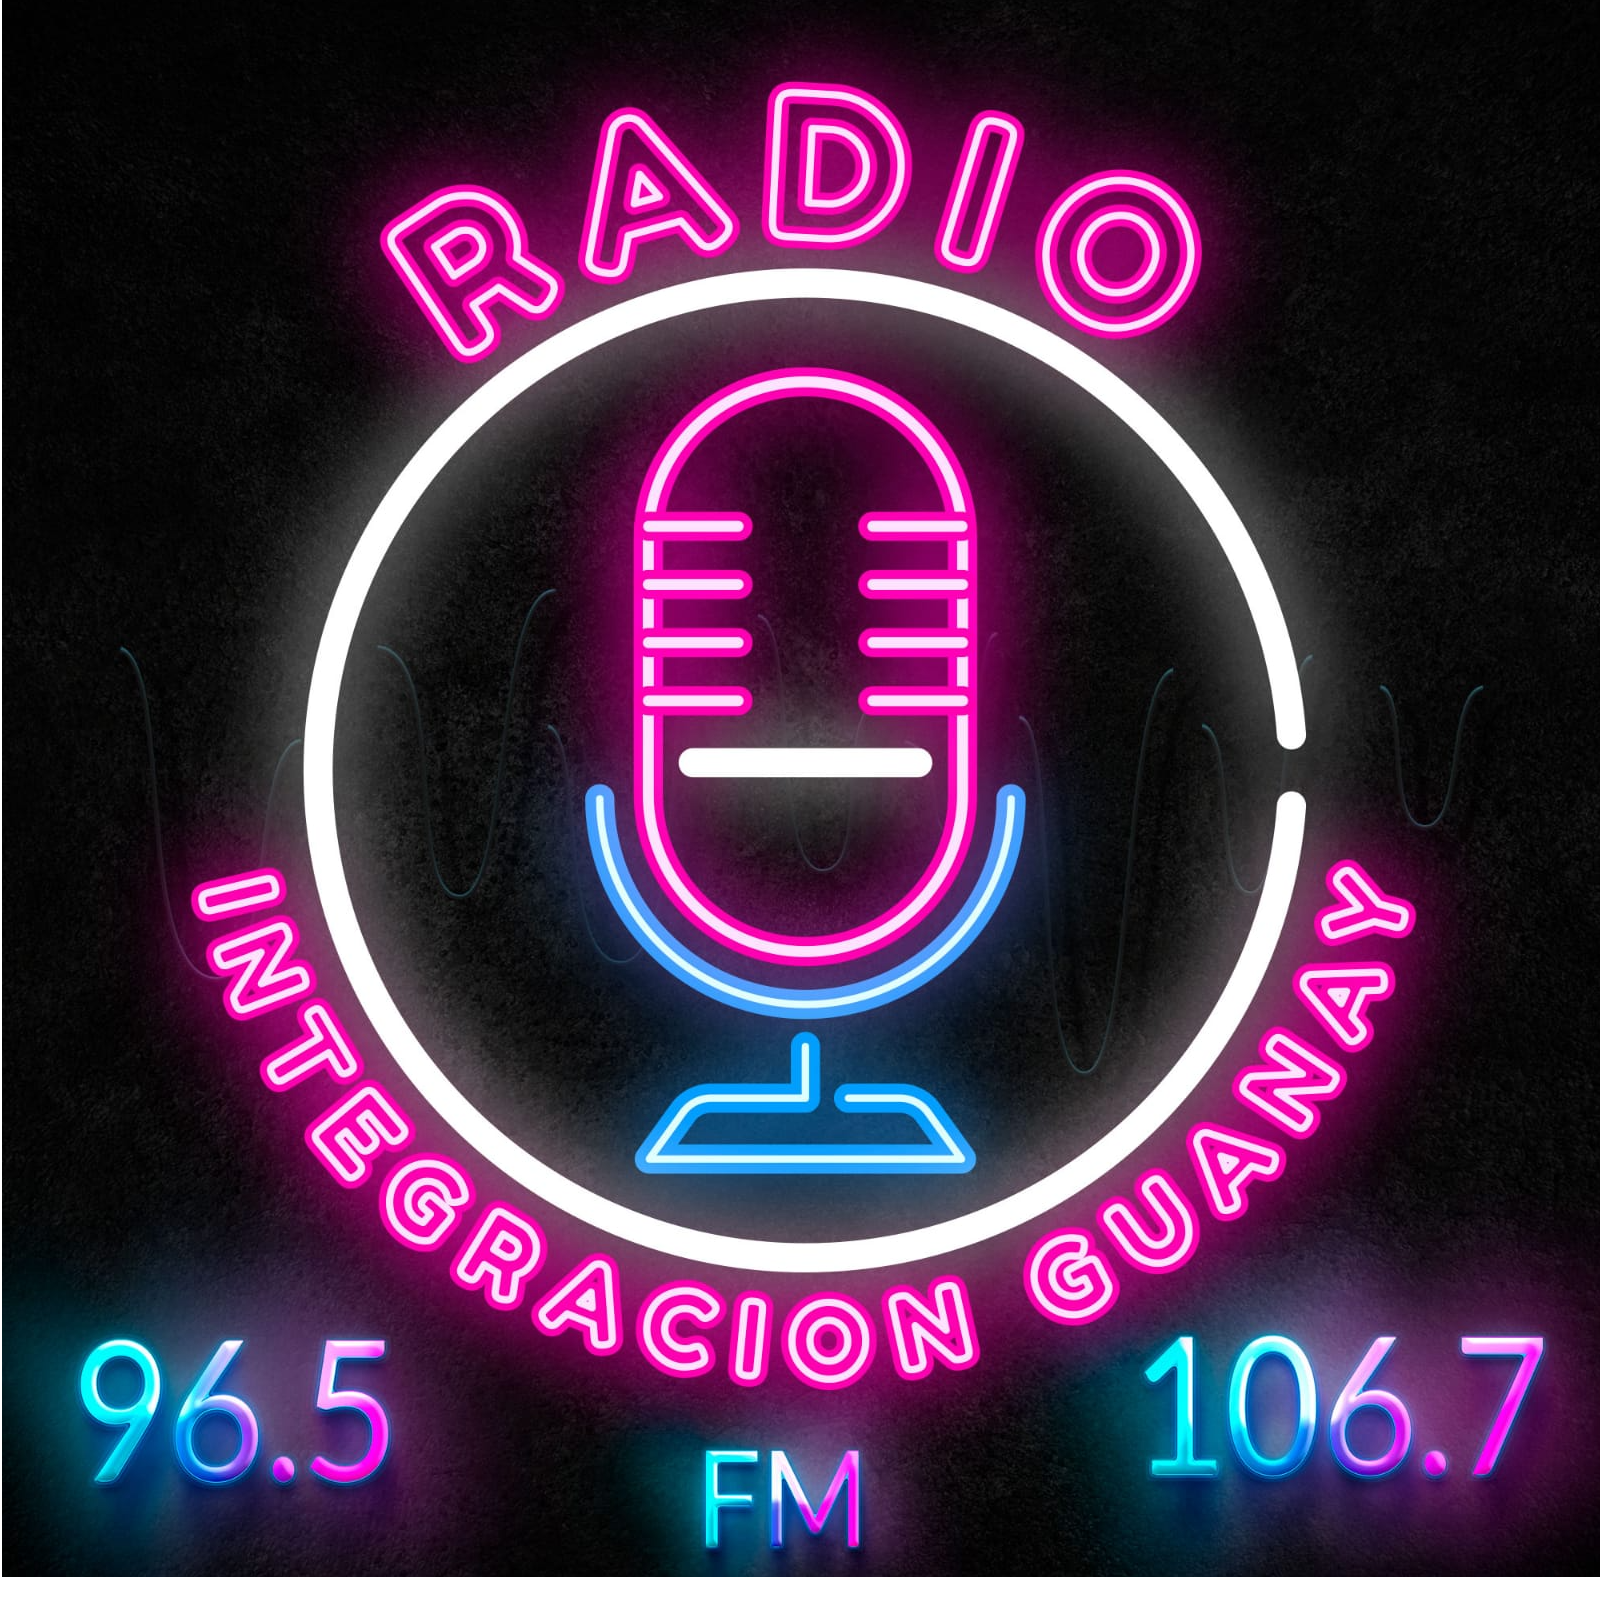 Radio Integracion Guanay